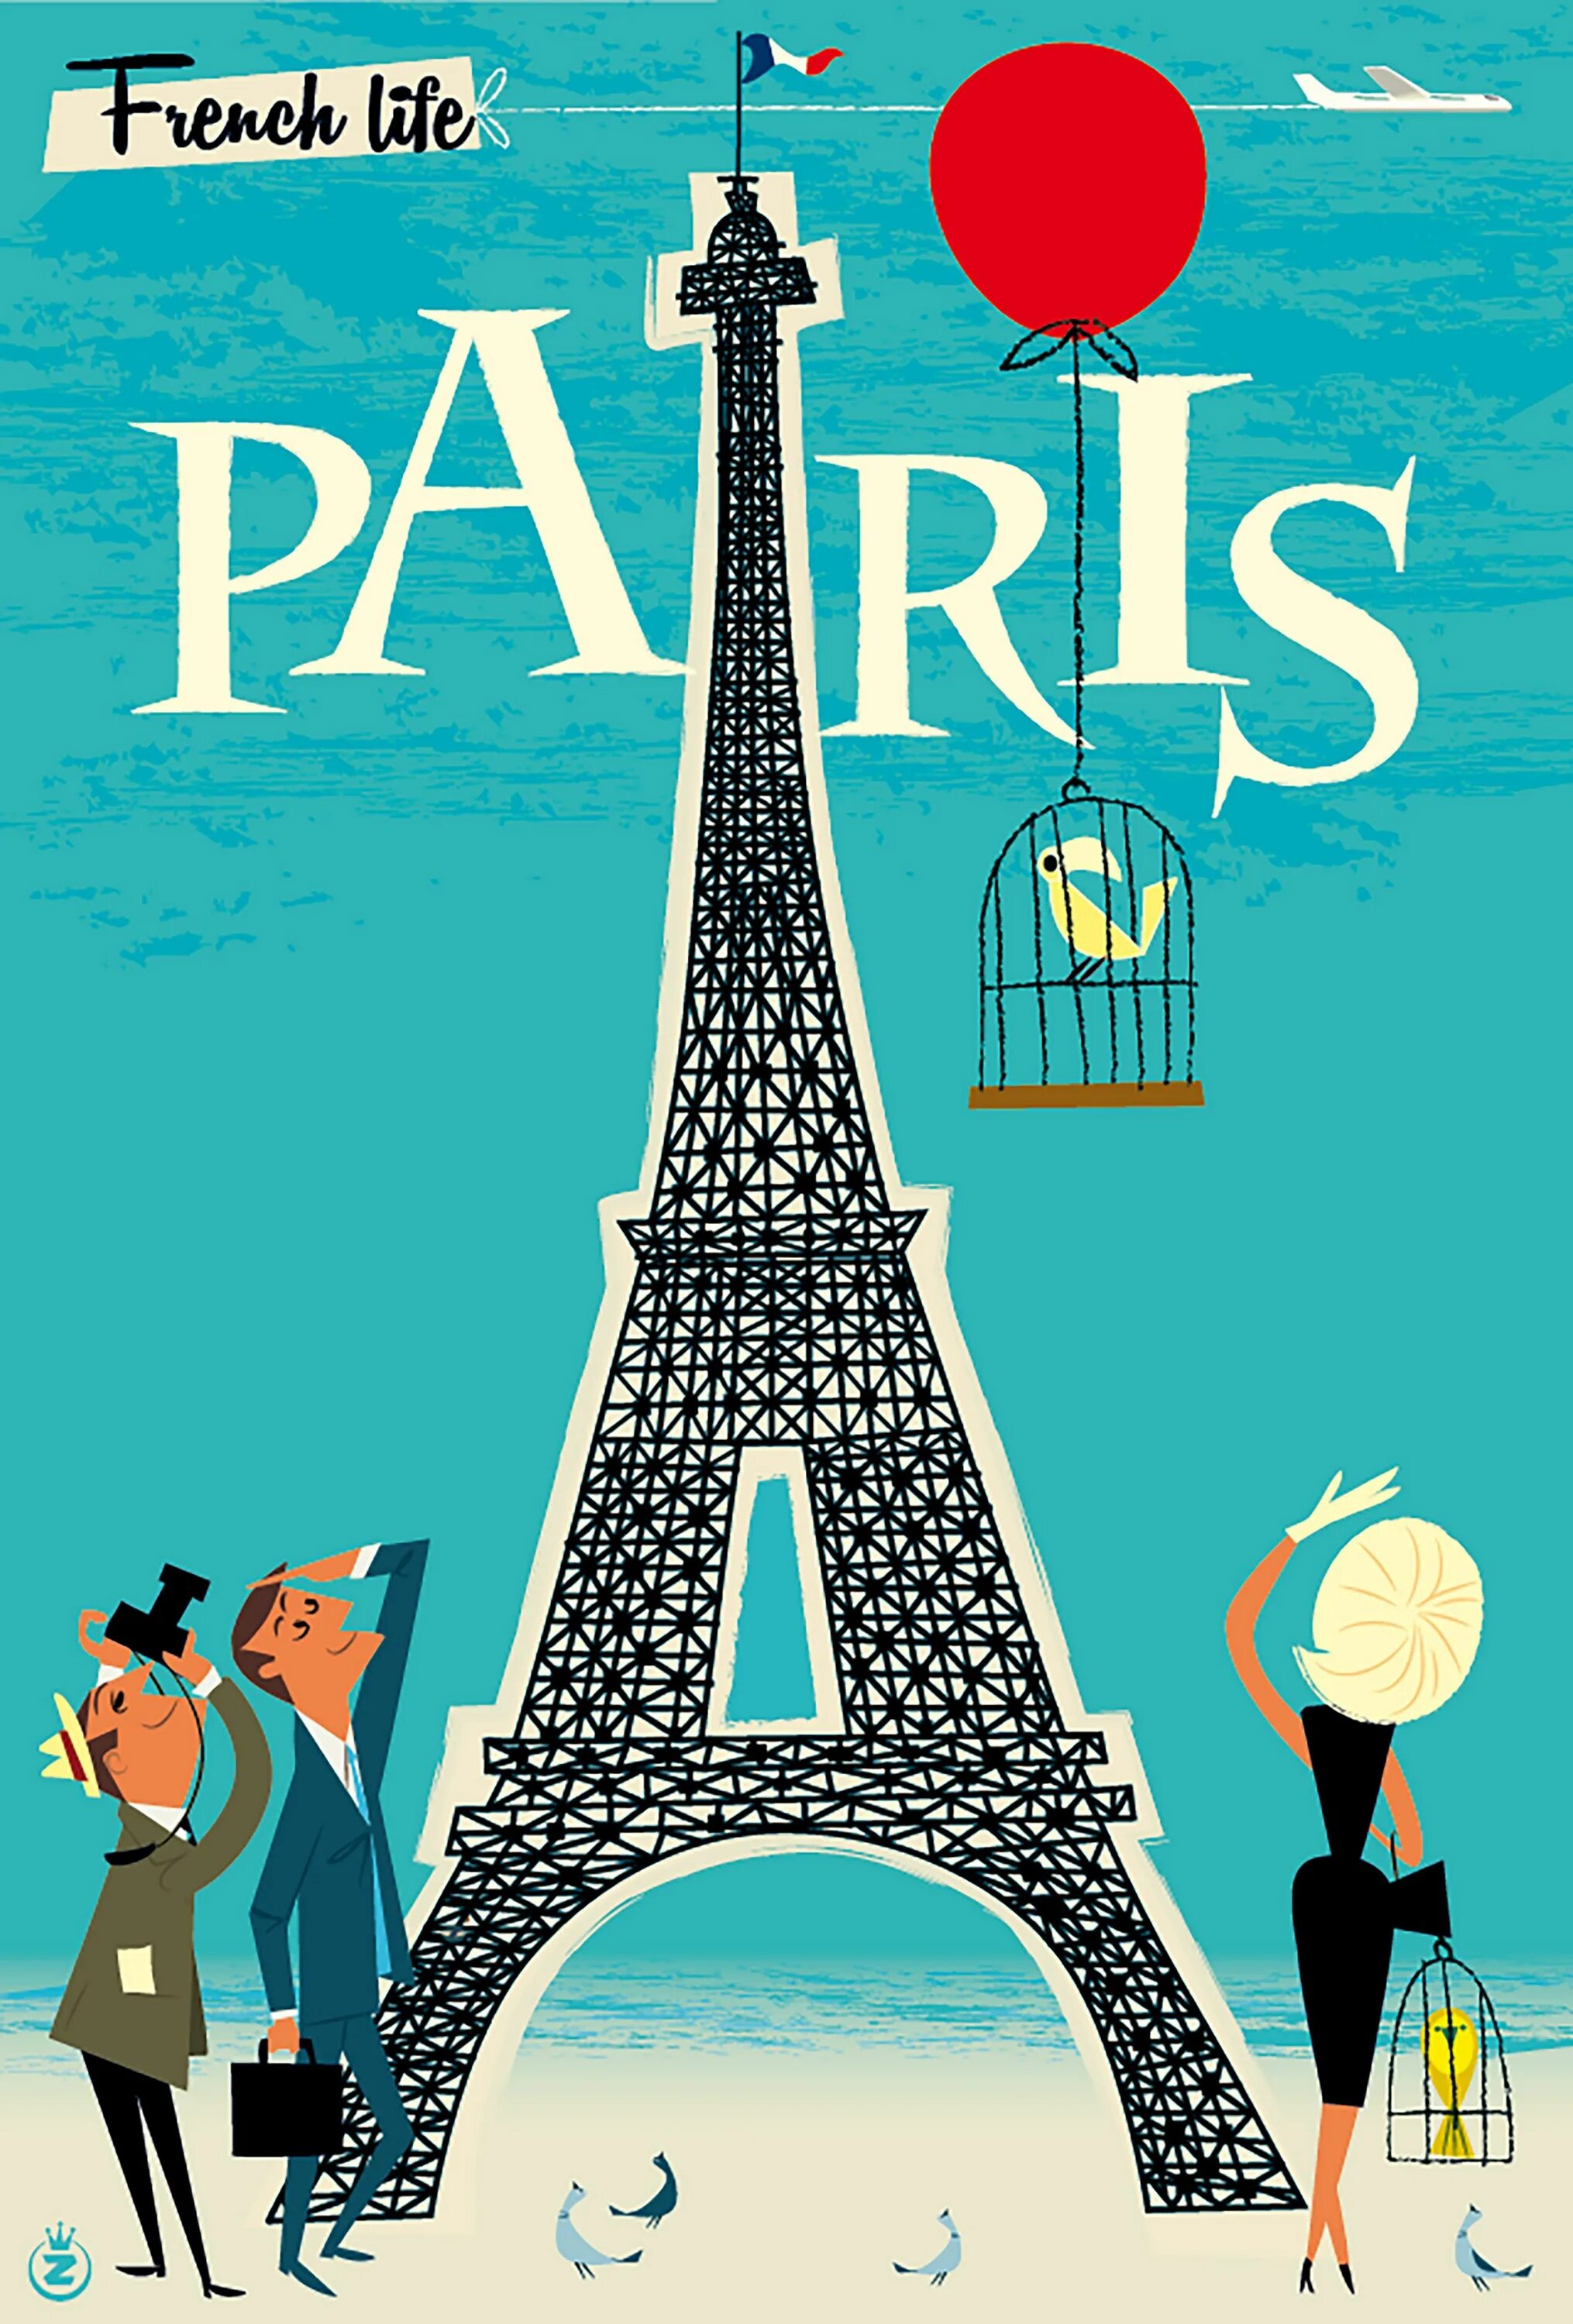 French life. Французские плакаты. Французские постеры. Французский стиль плакатов. Постеры с французской тематикой.